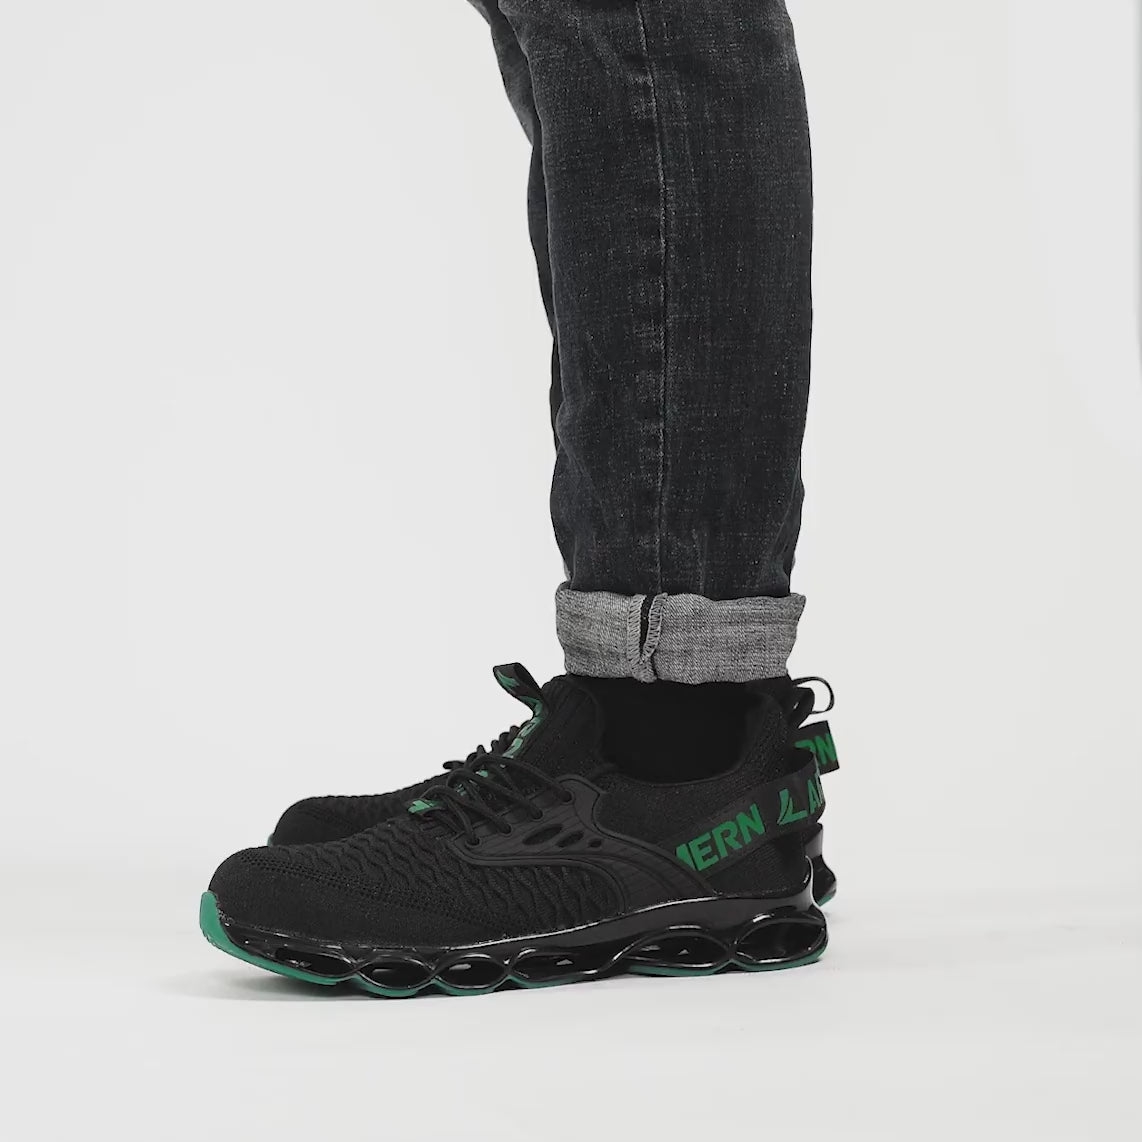 Men's Steel Toe Cap Sneakers Flying Woven Mesh Breathable Lightweight 200J Toe Protection, #21004